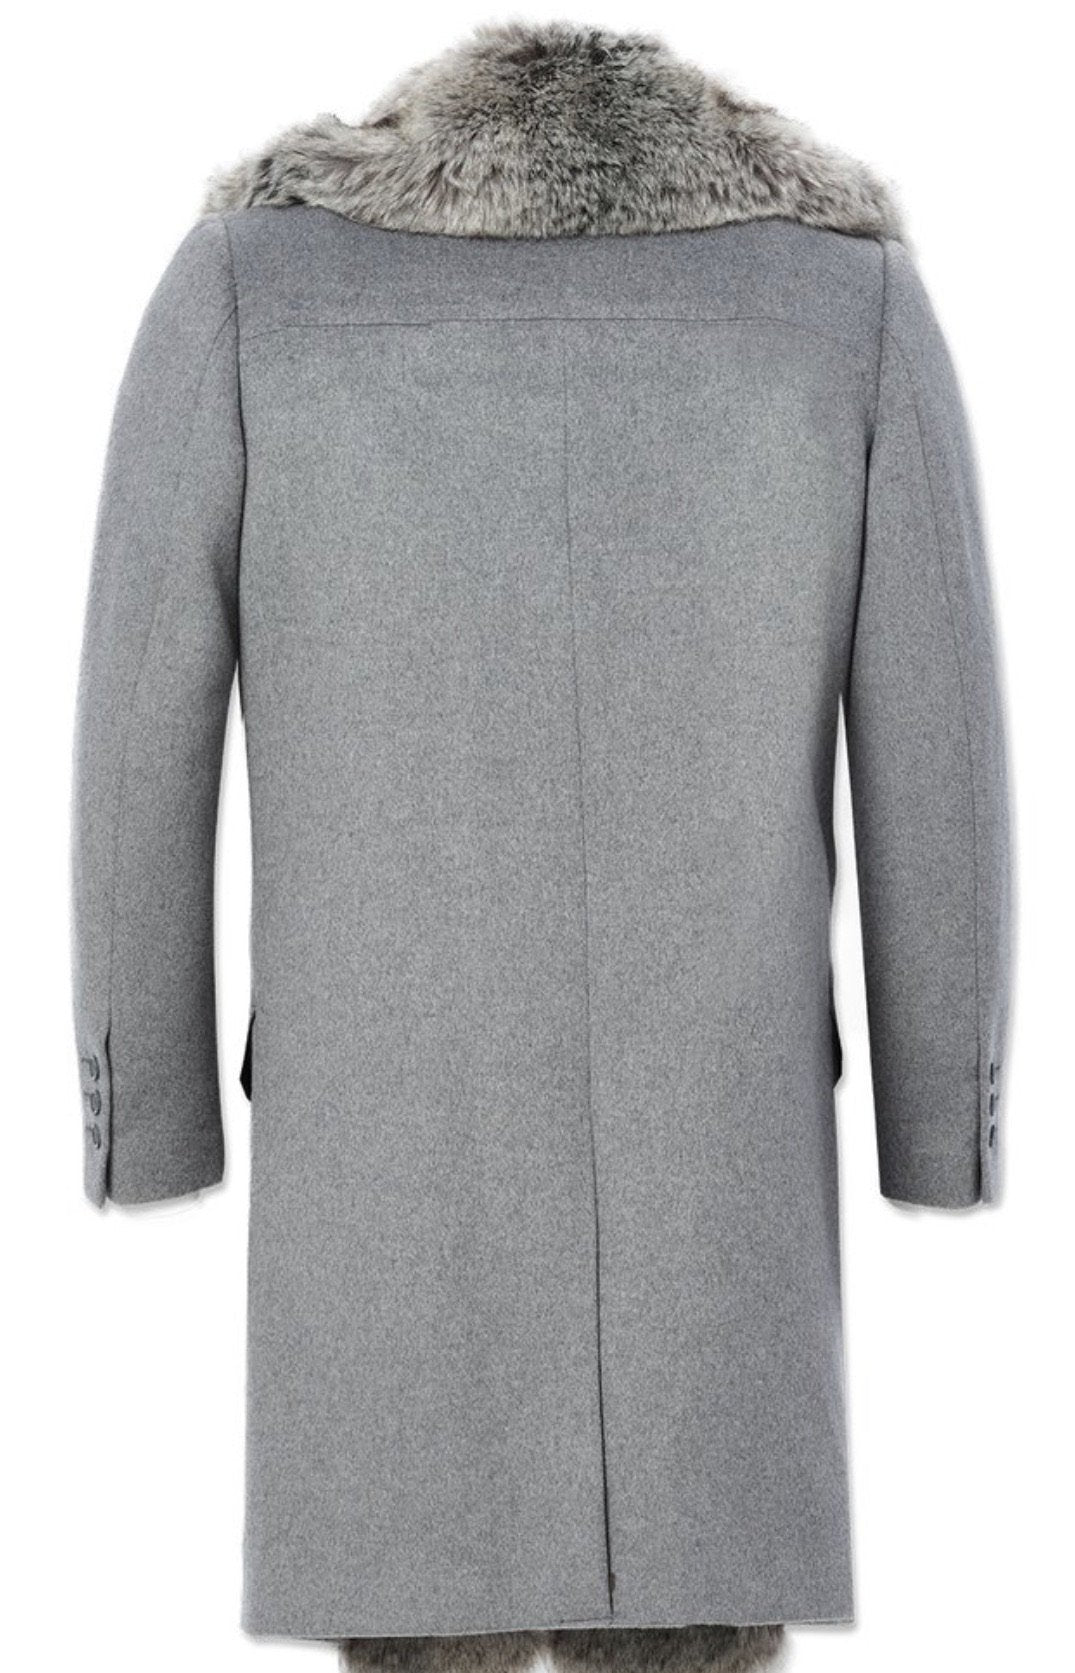 Men’s Pea Coat (Grey)